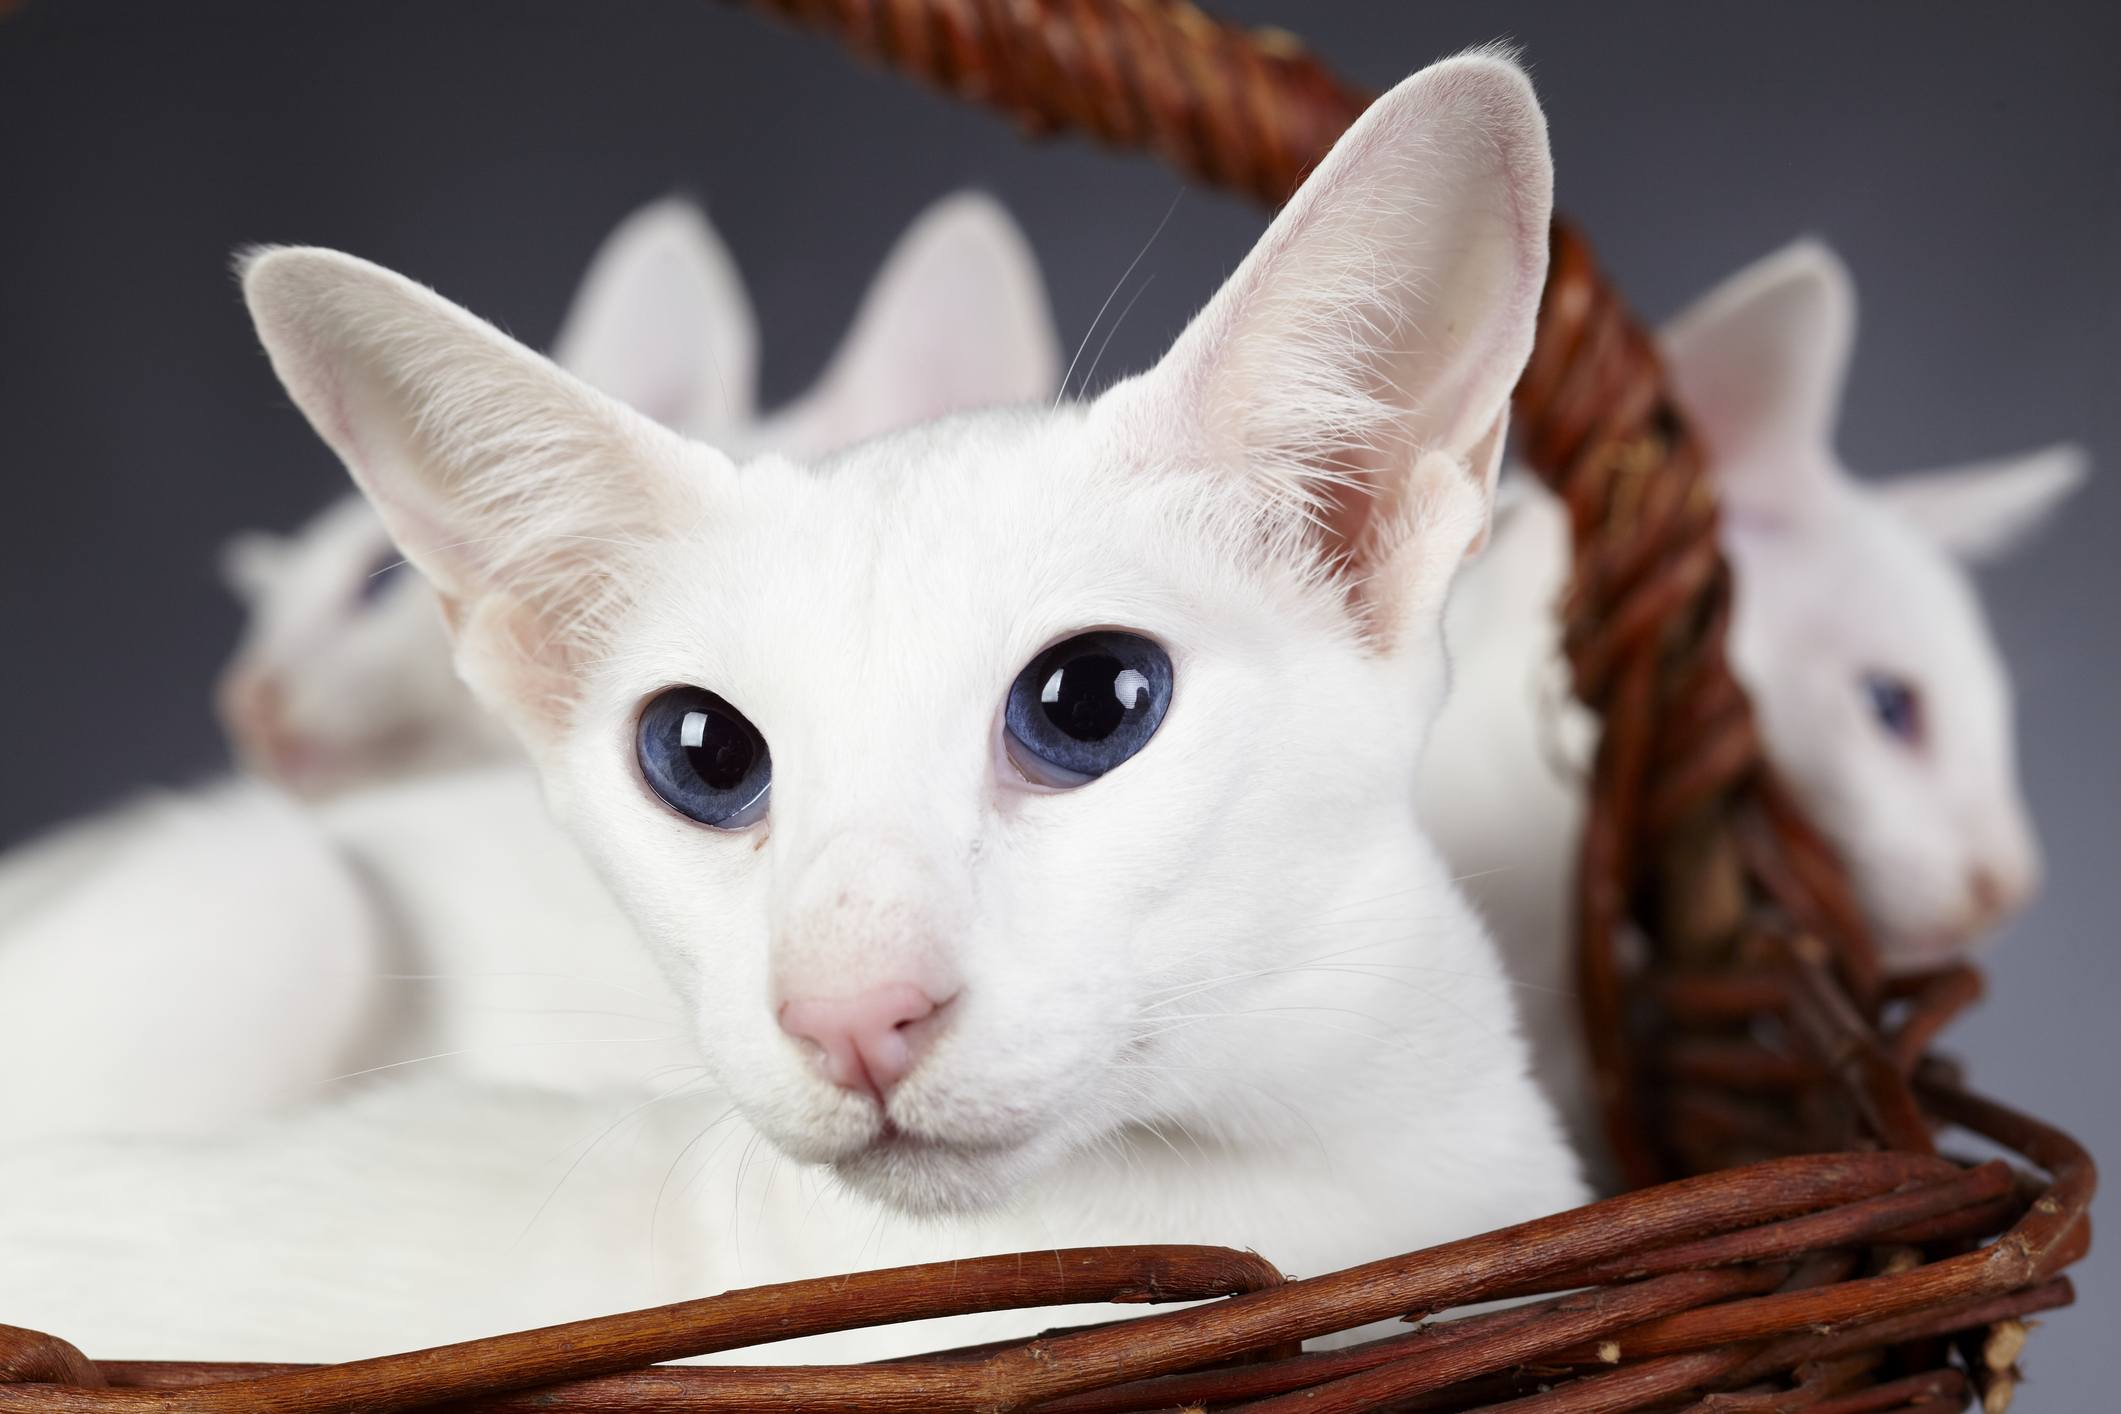 Colorpoint Shorthair cat